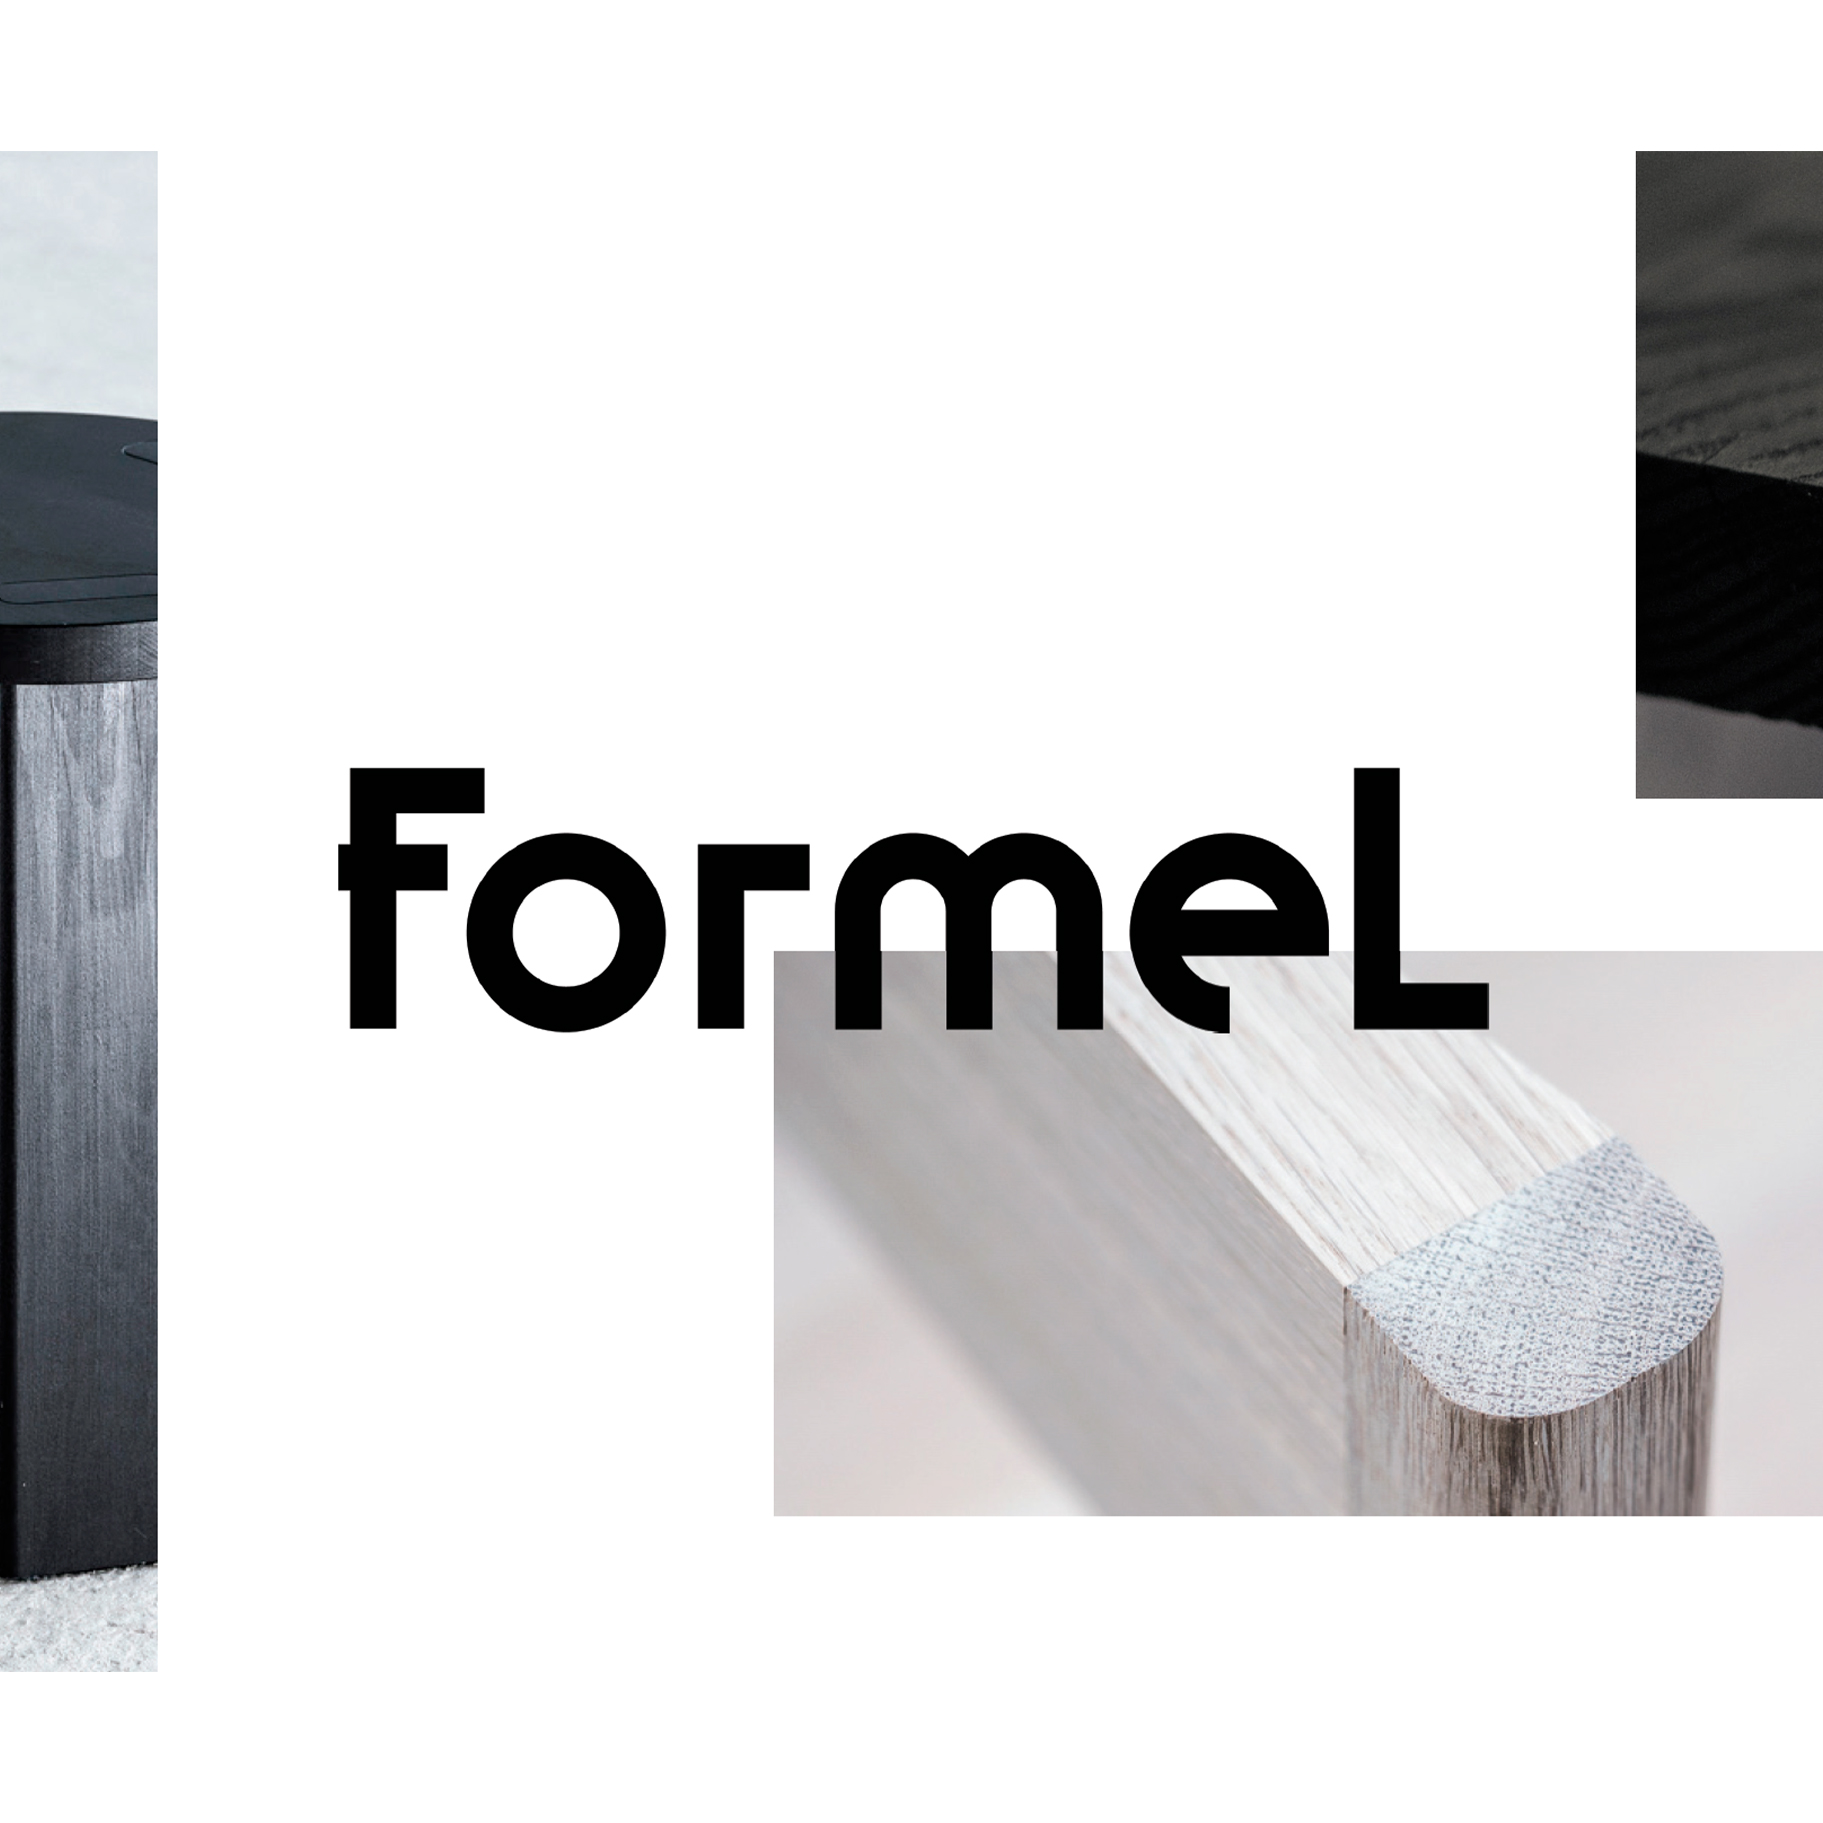 Formel logo fond